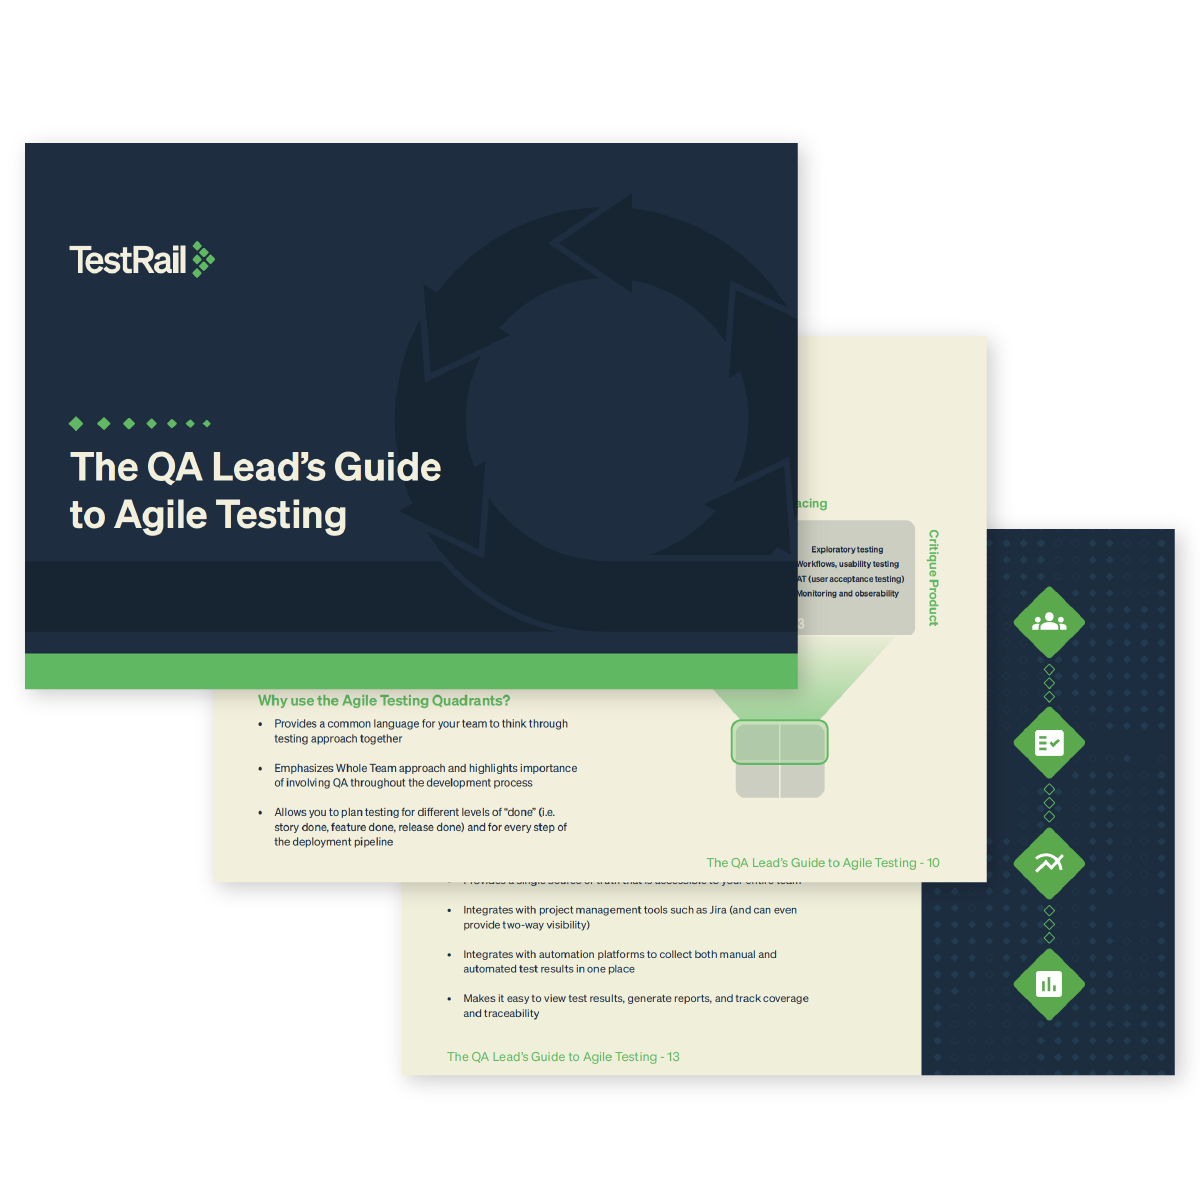 The QA Lead's Guide to Agile Testing